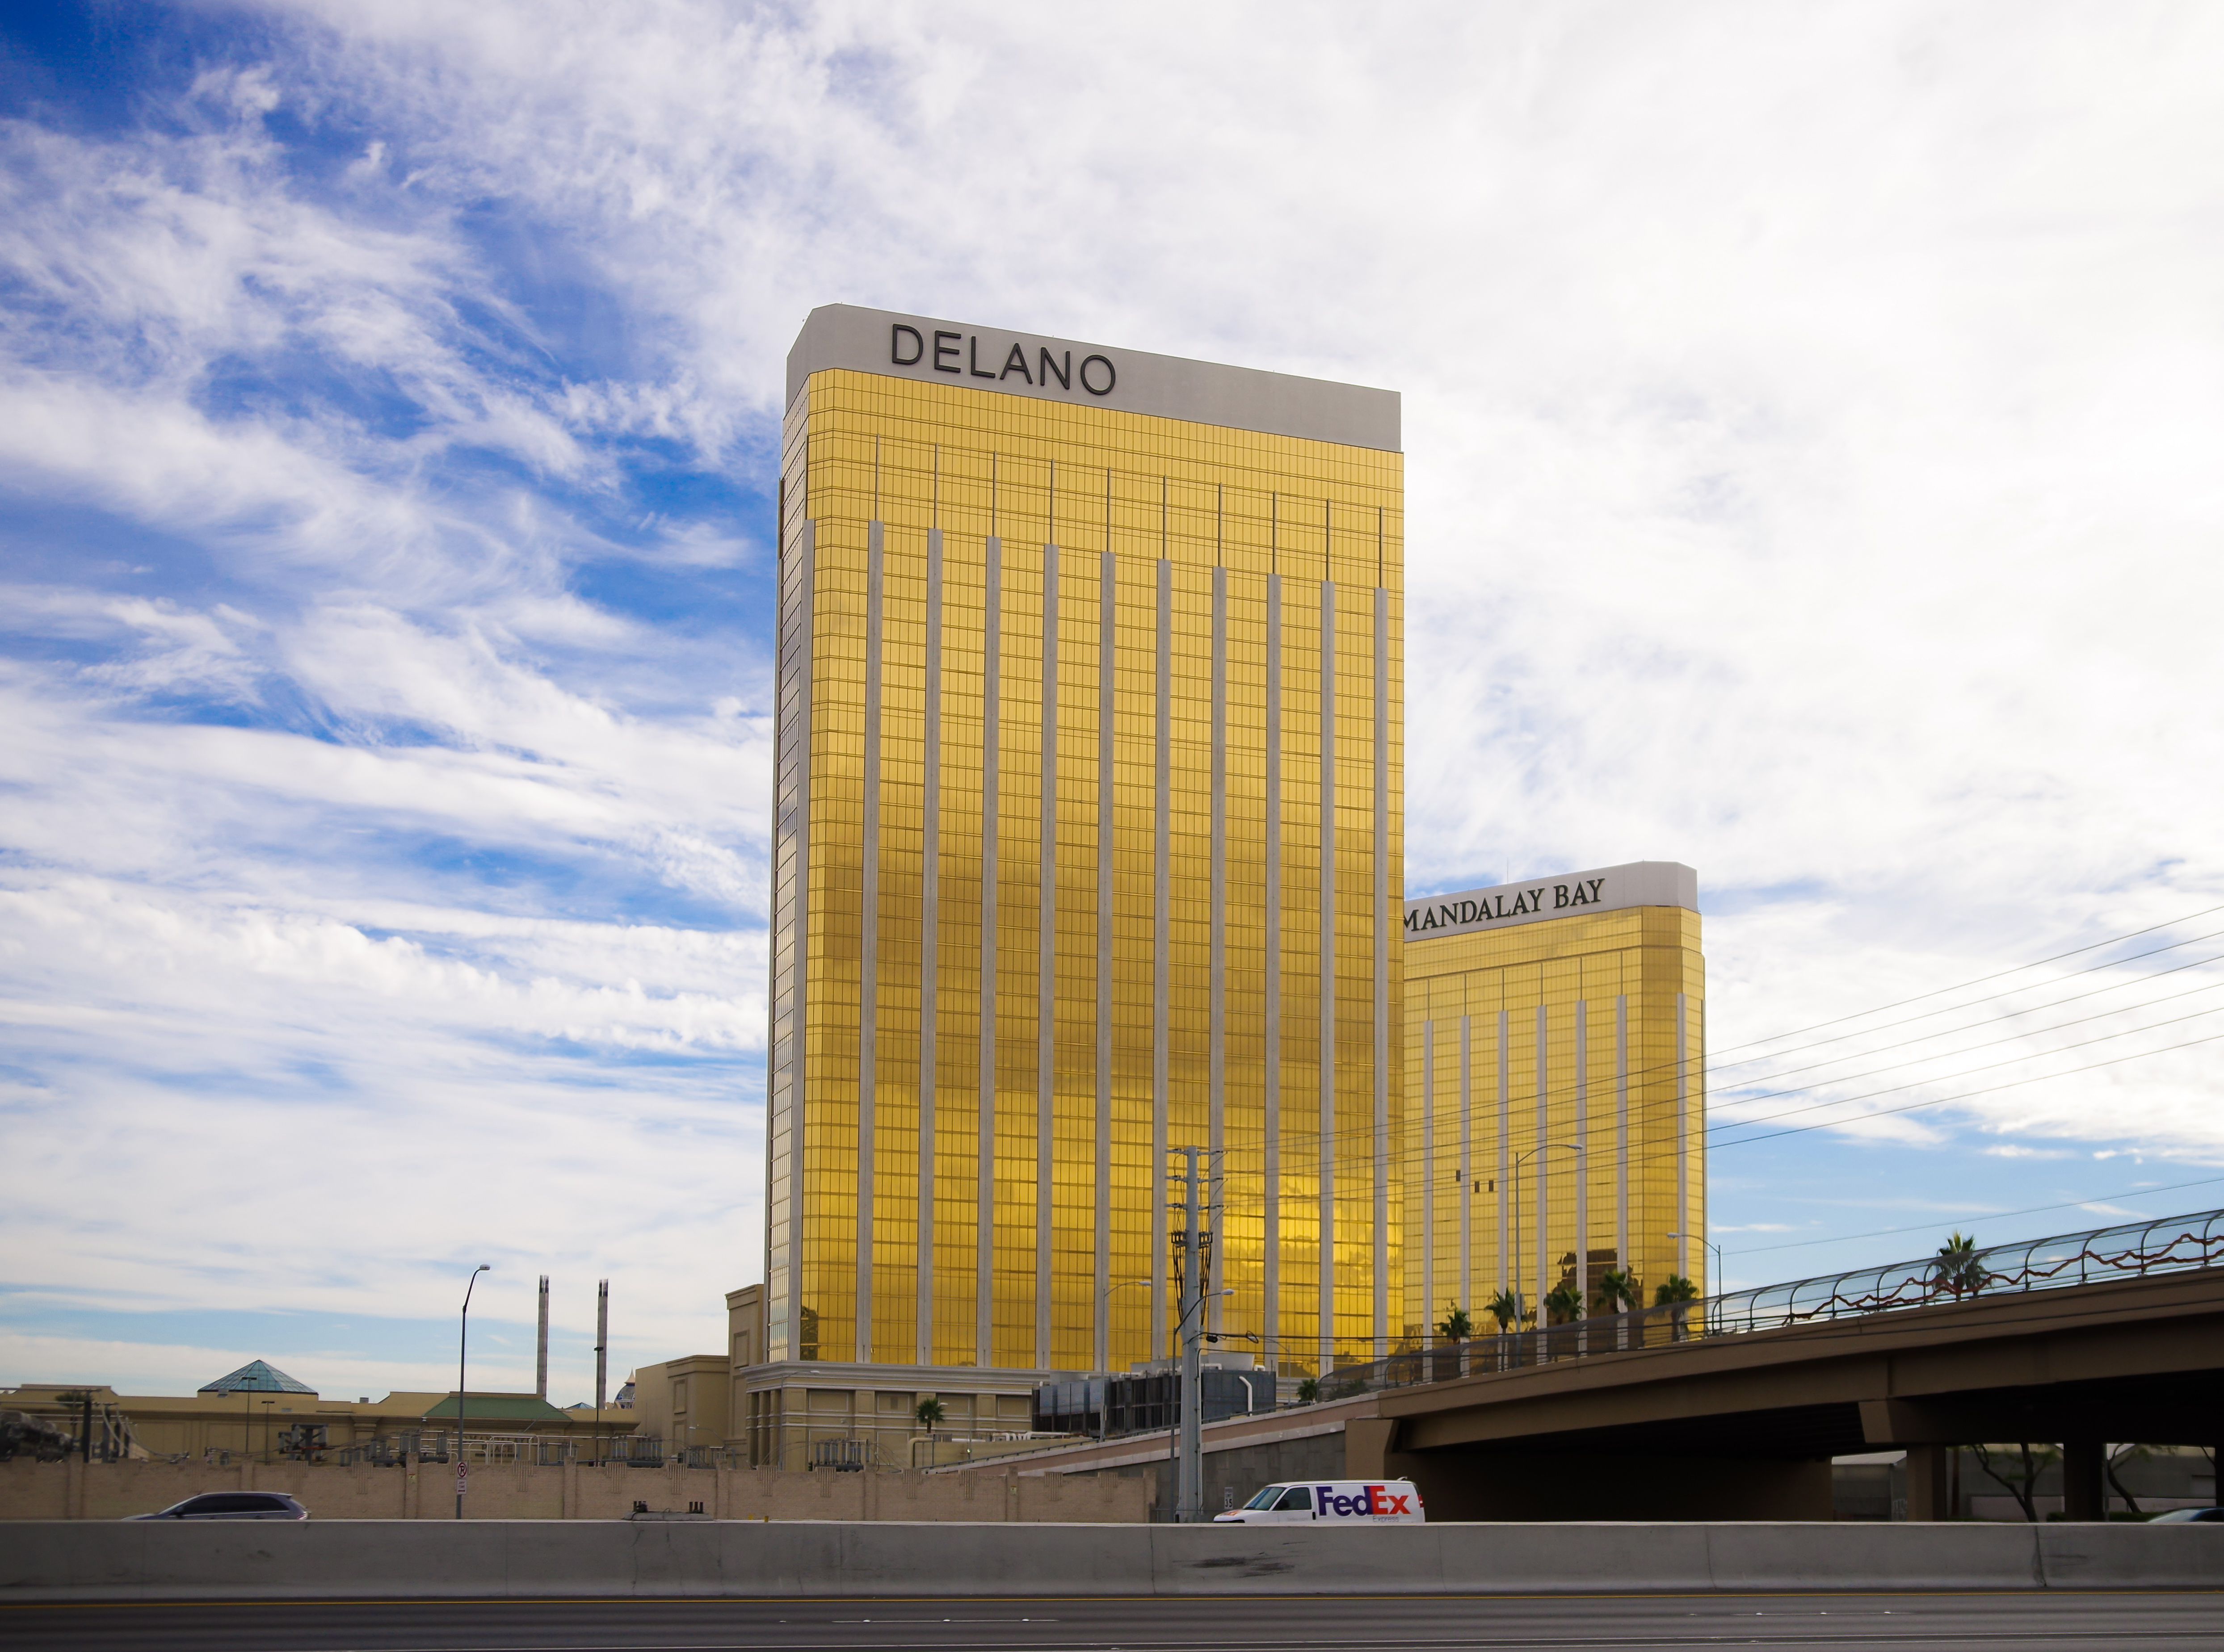 Resort Delano at Mandalay Bay, Las Vegas